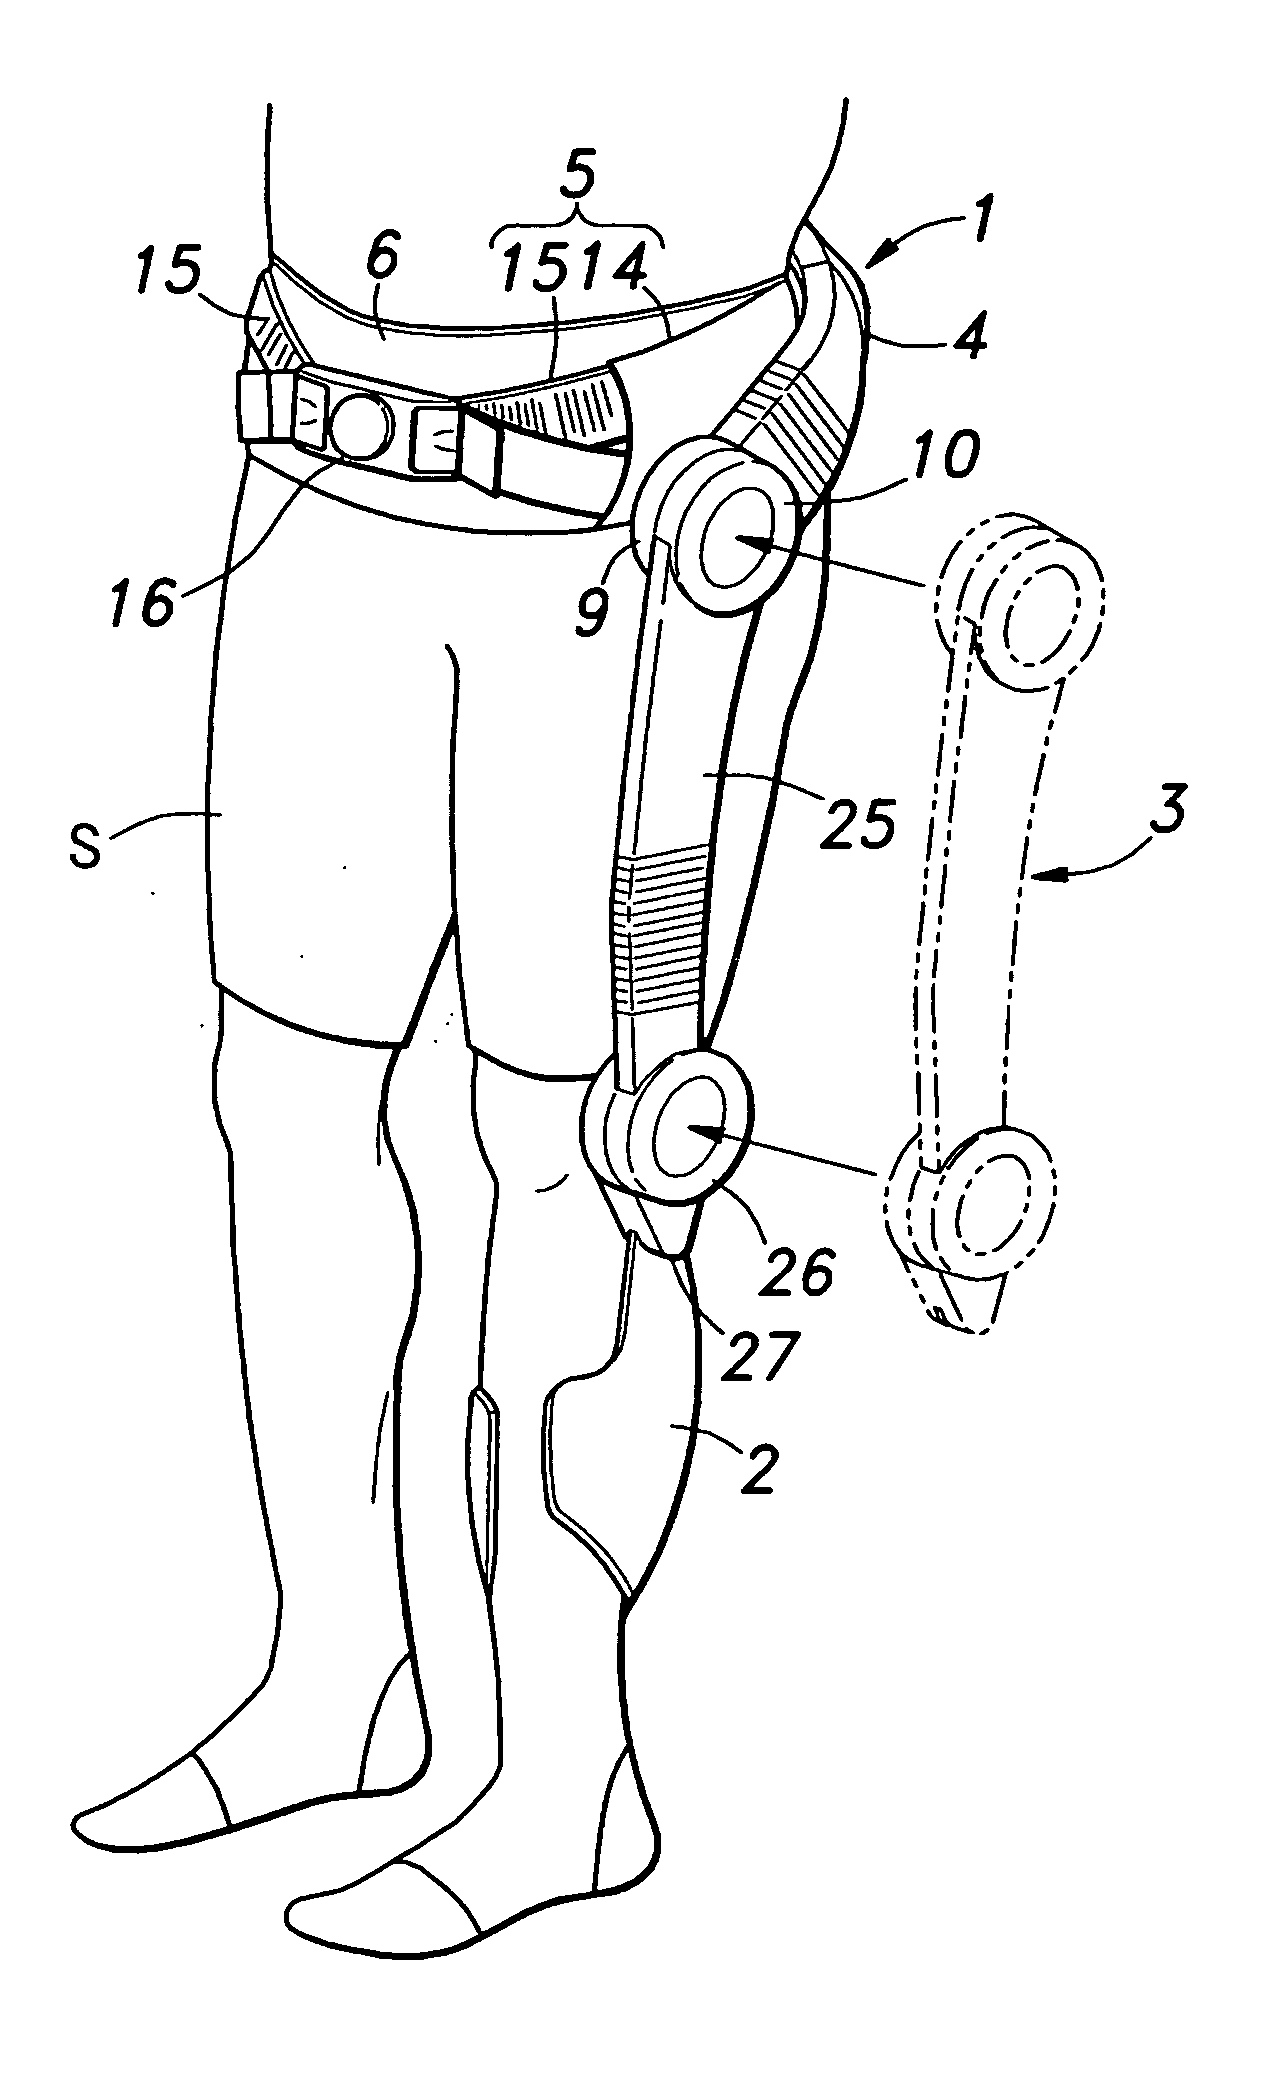 Walking aid device